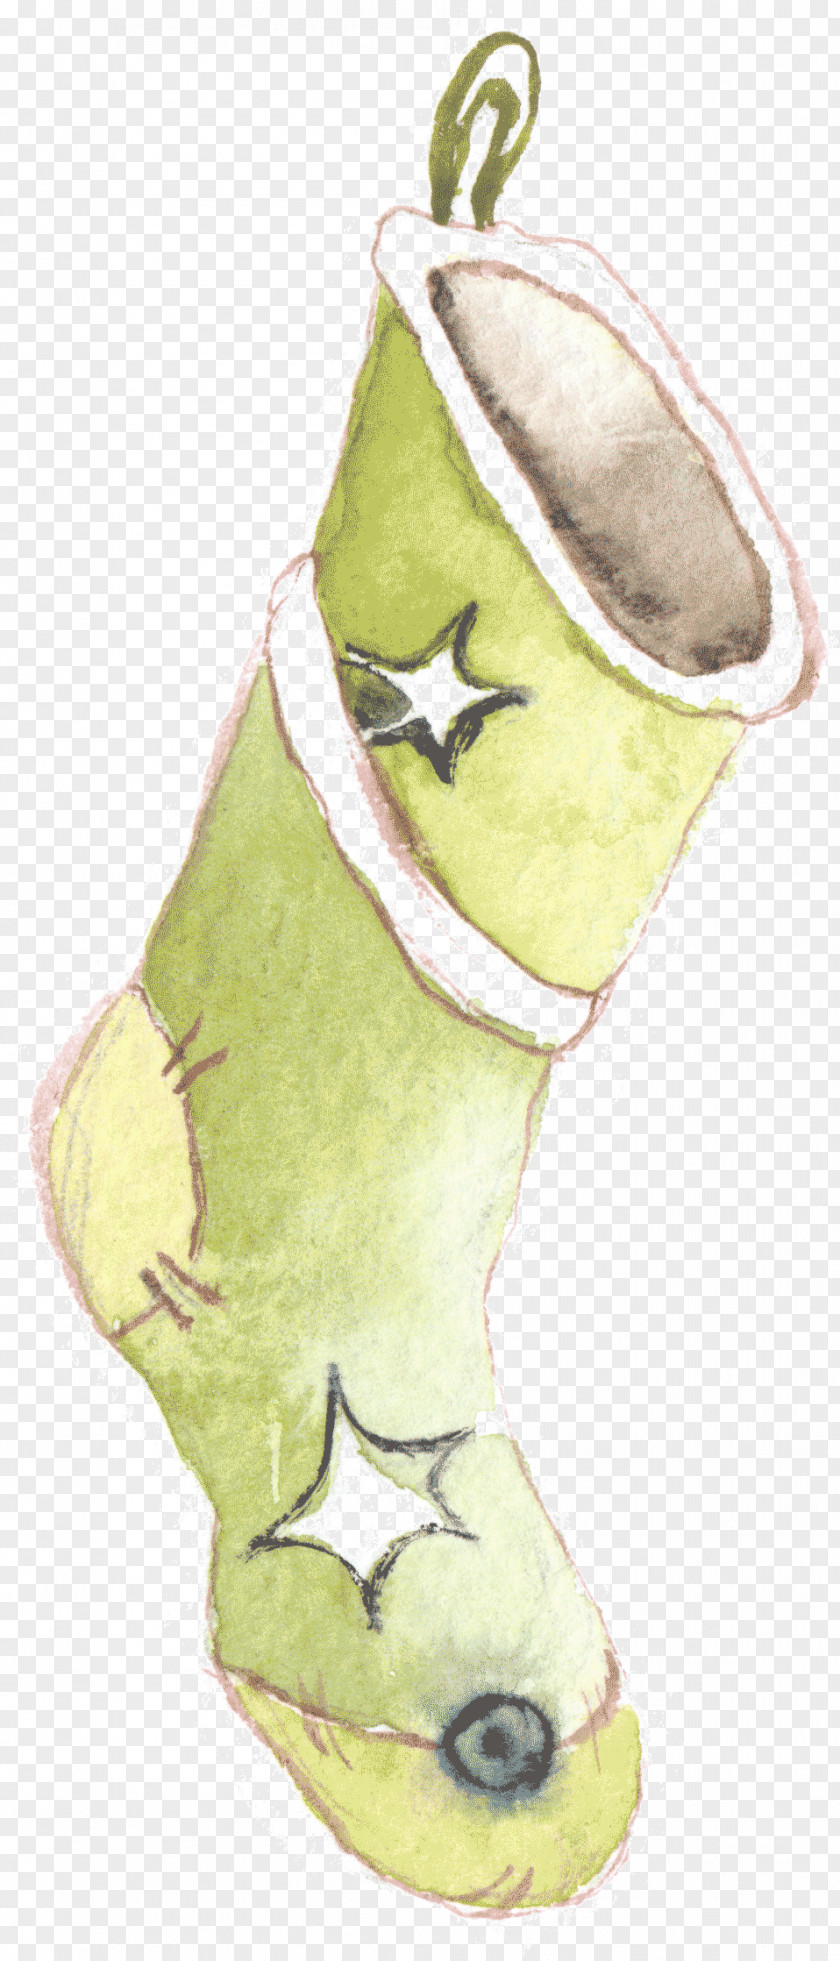 Green Sock Drawing /m/02csf Illustration Christmas Ornament Shoe PNG